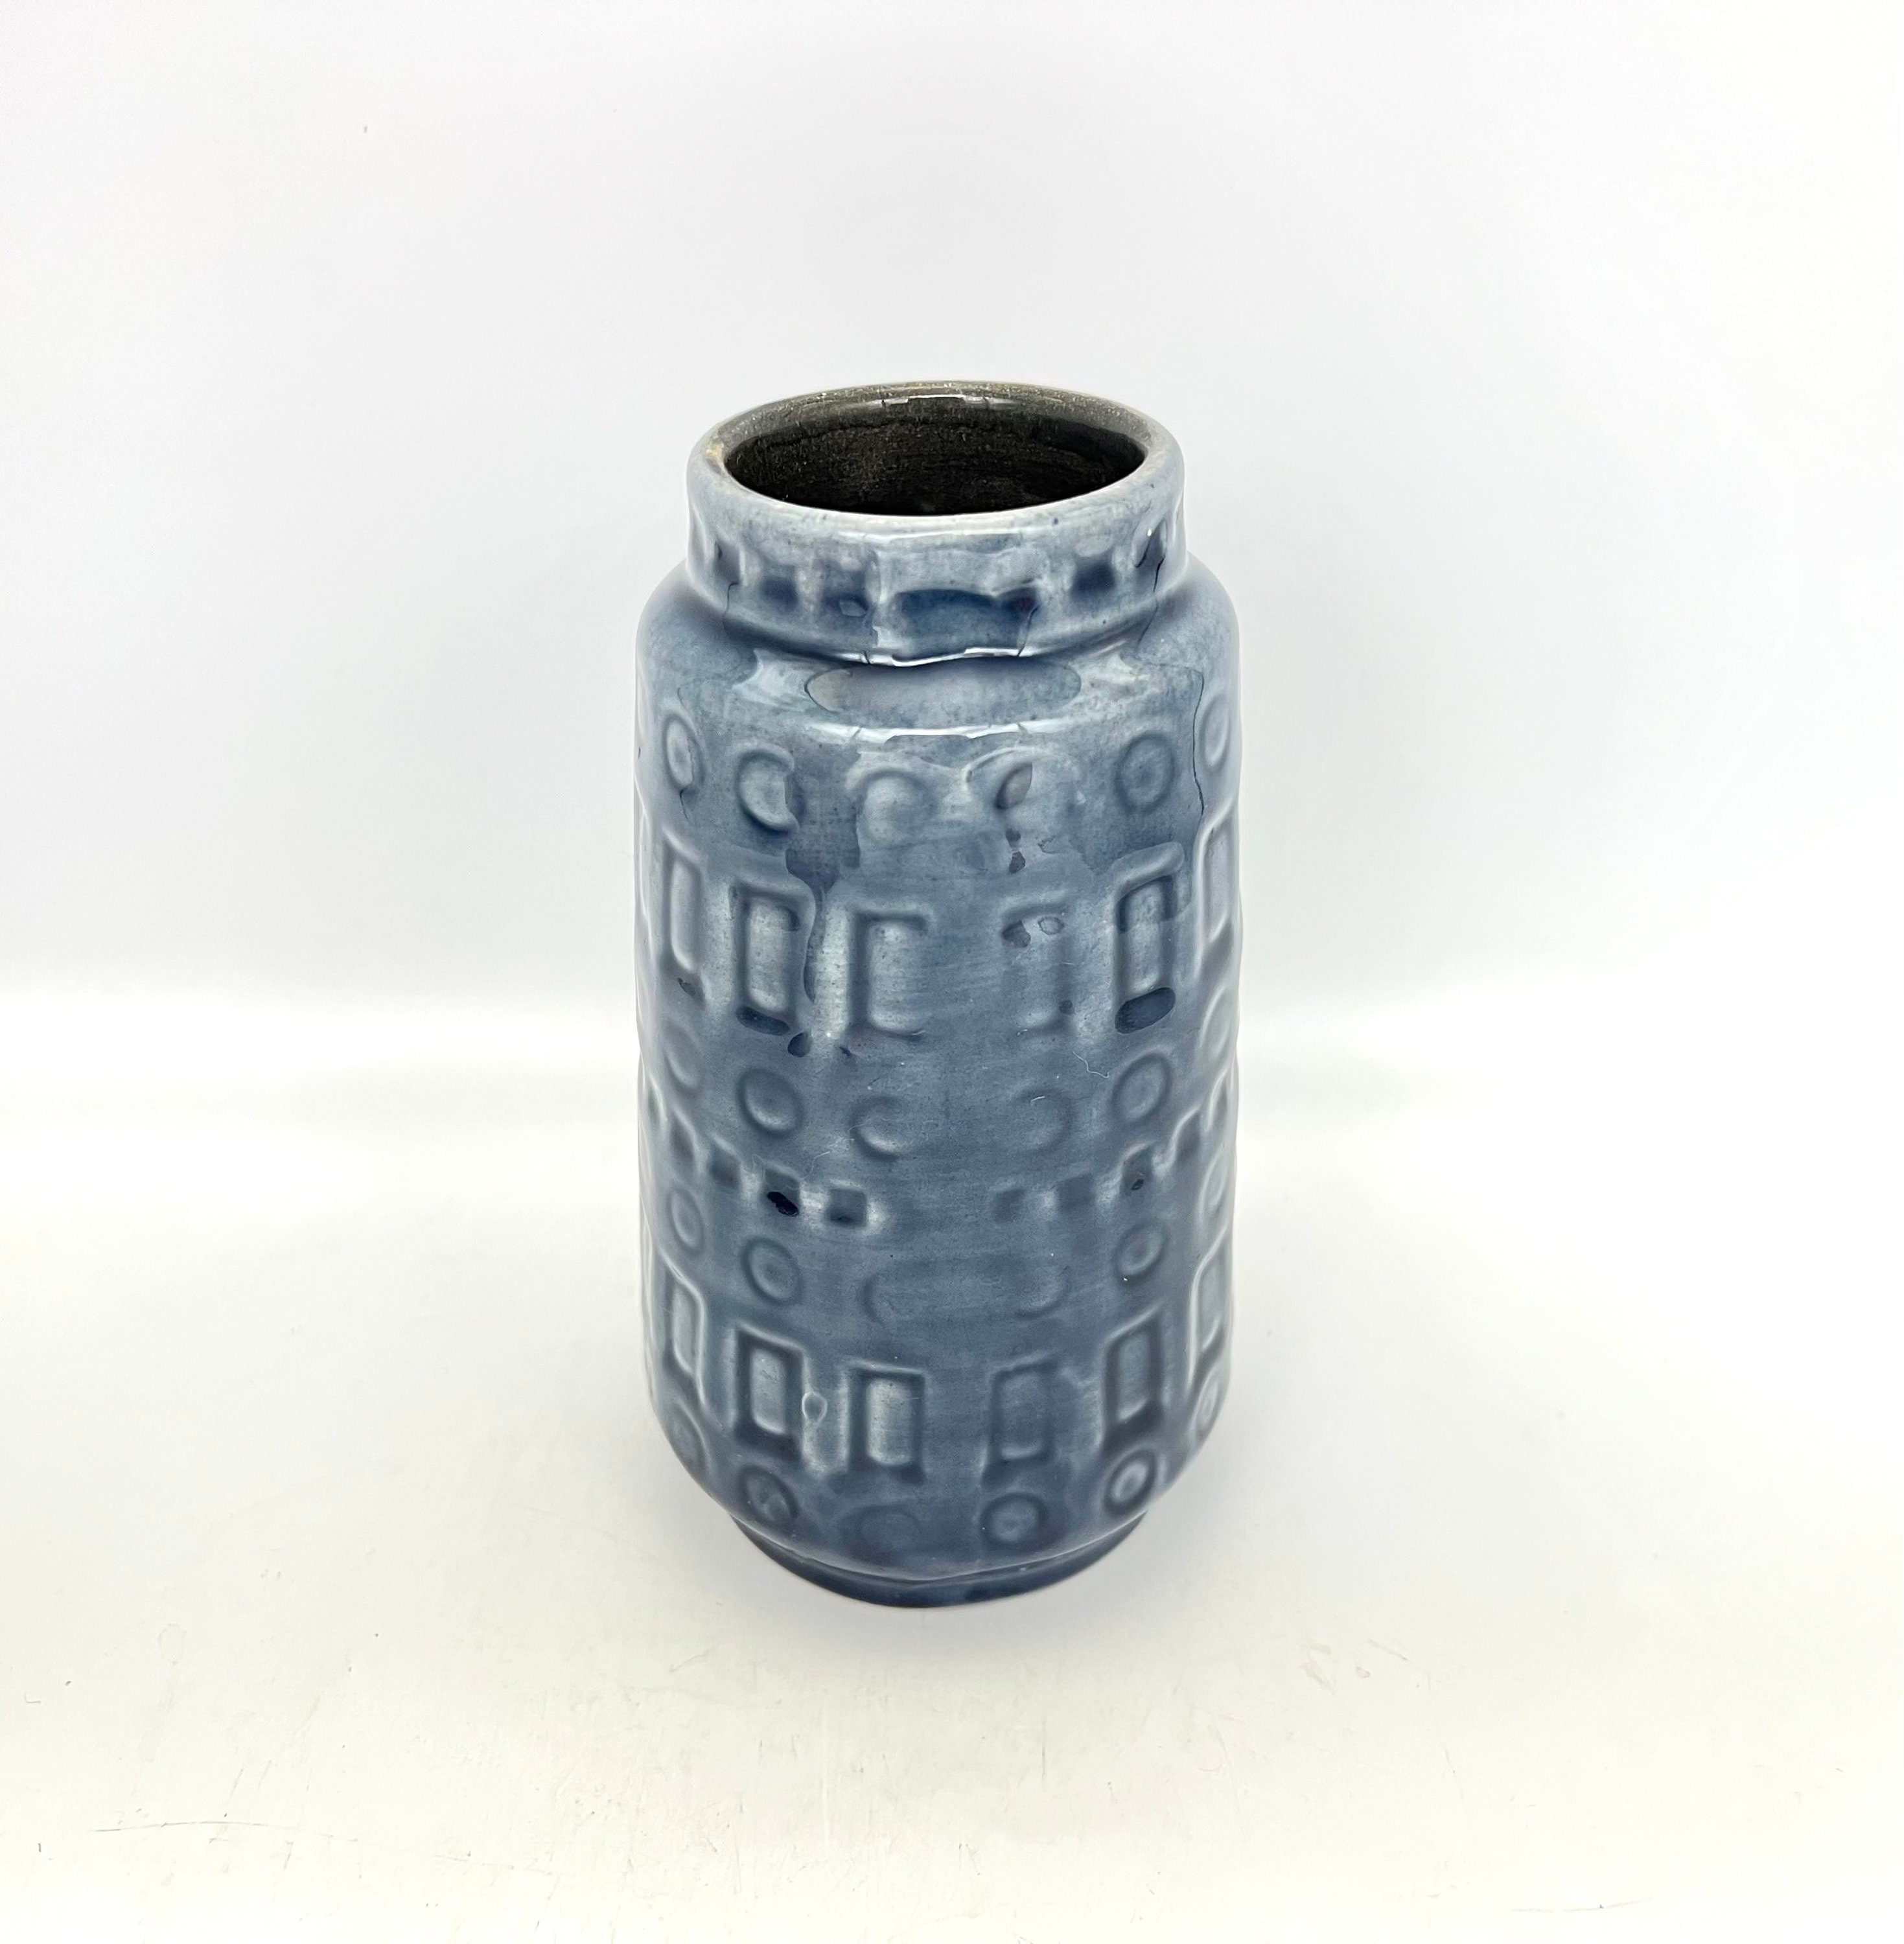 Scheurich Keramik 15 Vase Light Modern Made WGP. ,,inka - : 260 / Century in the West Germany. Color Mid Grey 1970s Decor Etsy Blue